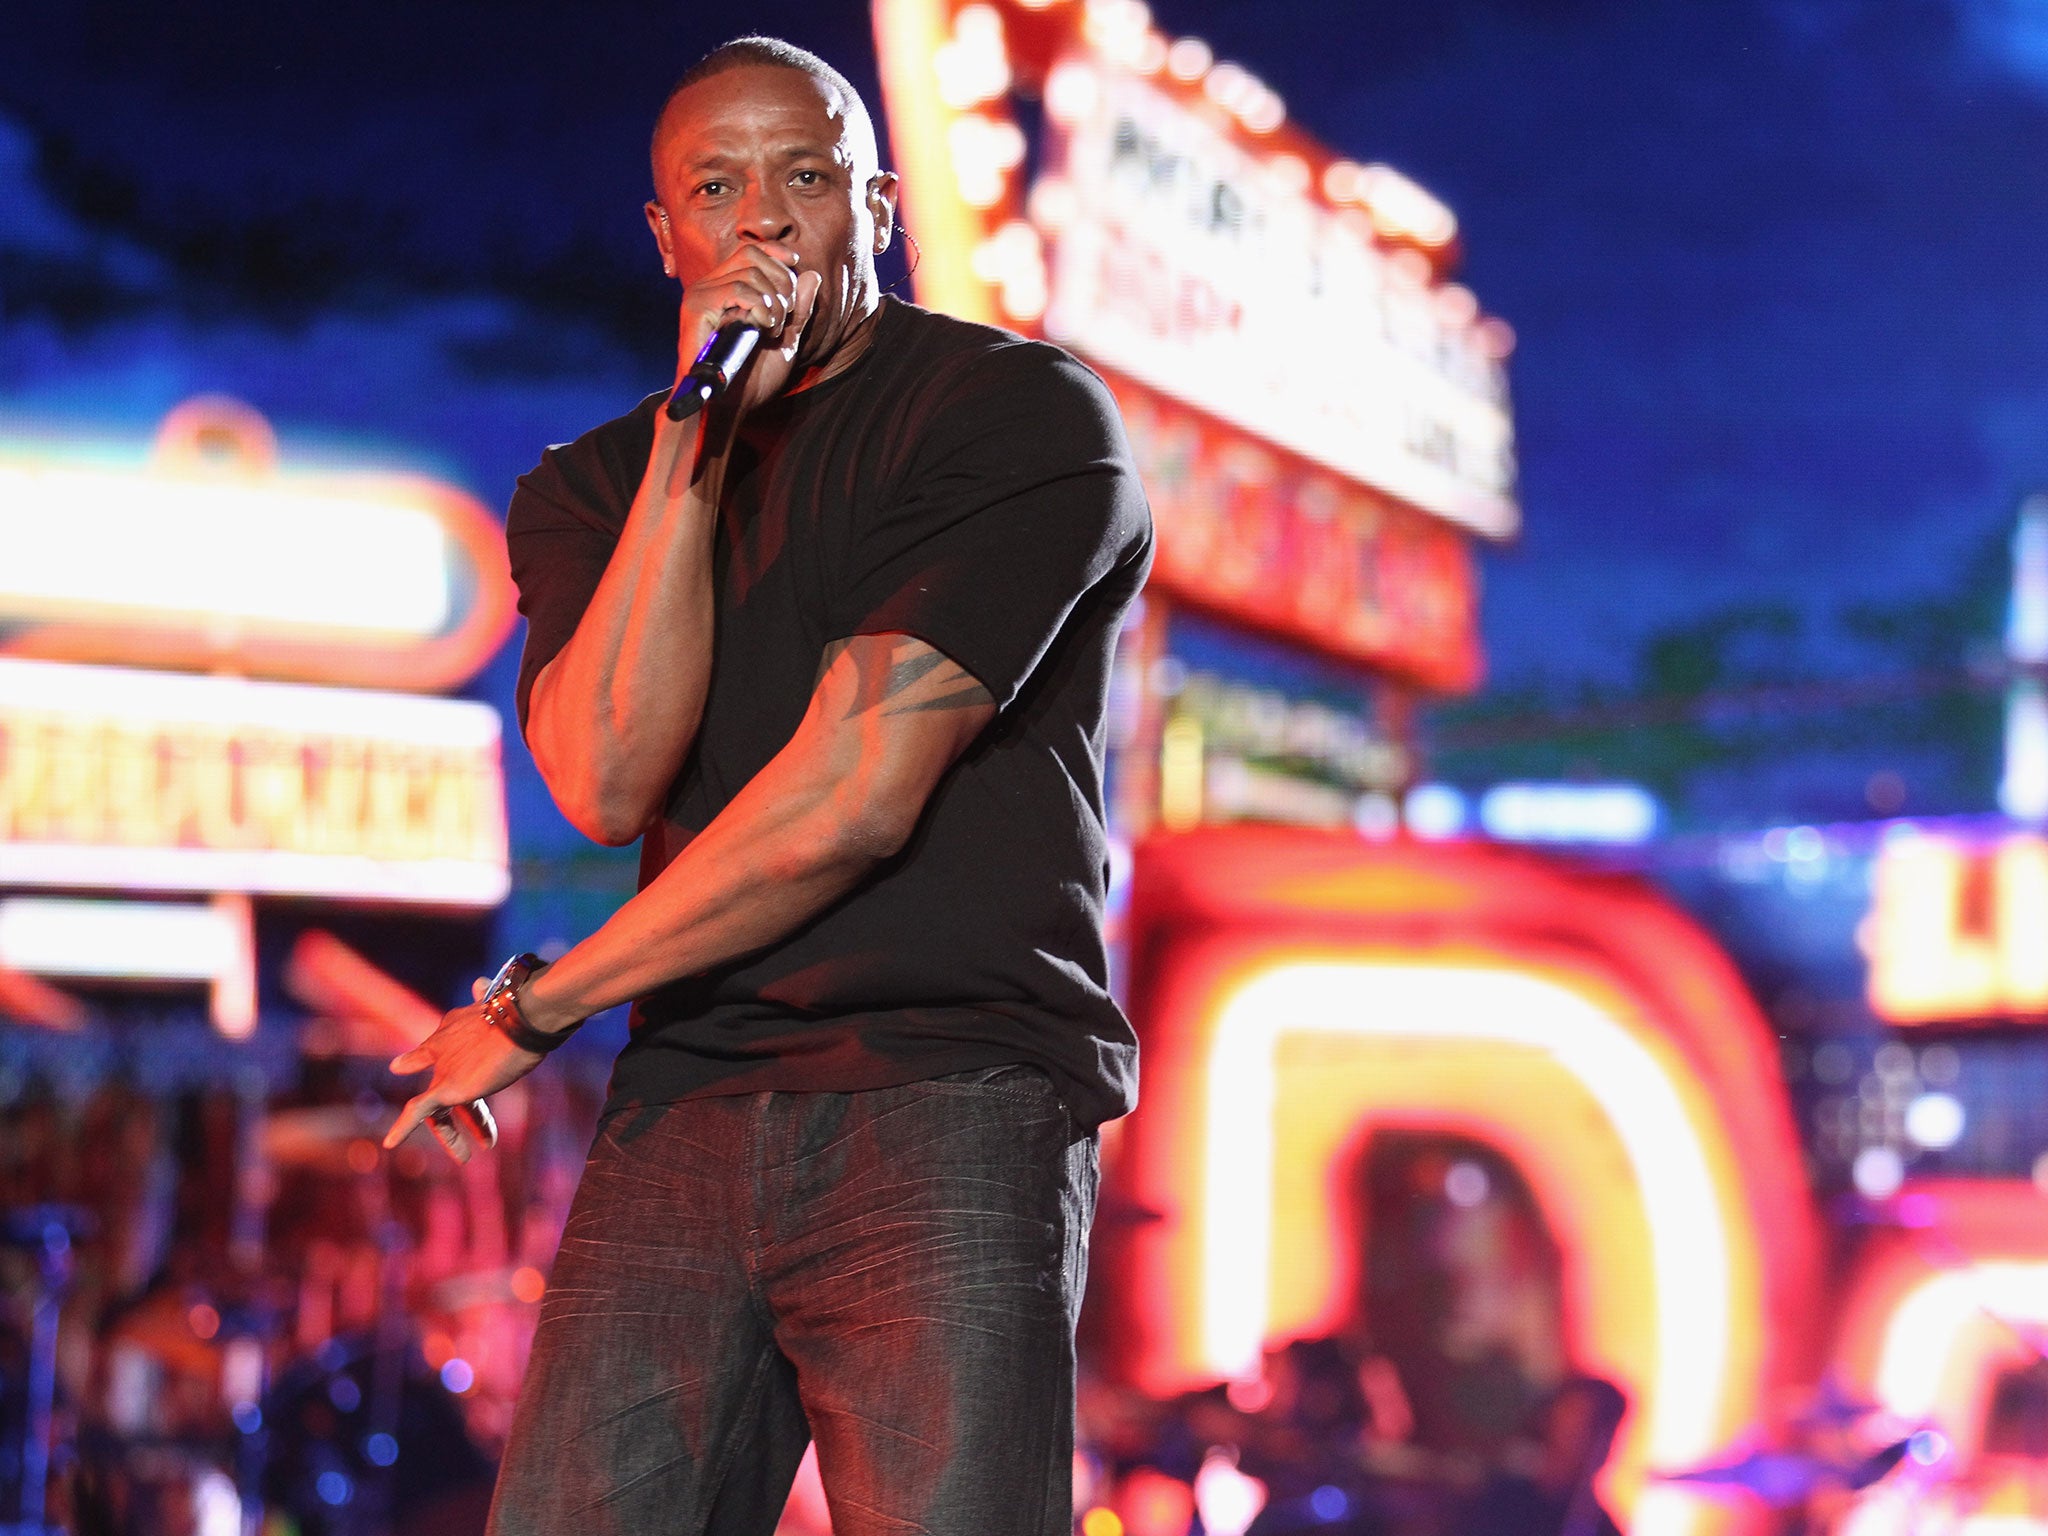 Rapper Dr Dre performs at Coachella music festival in California